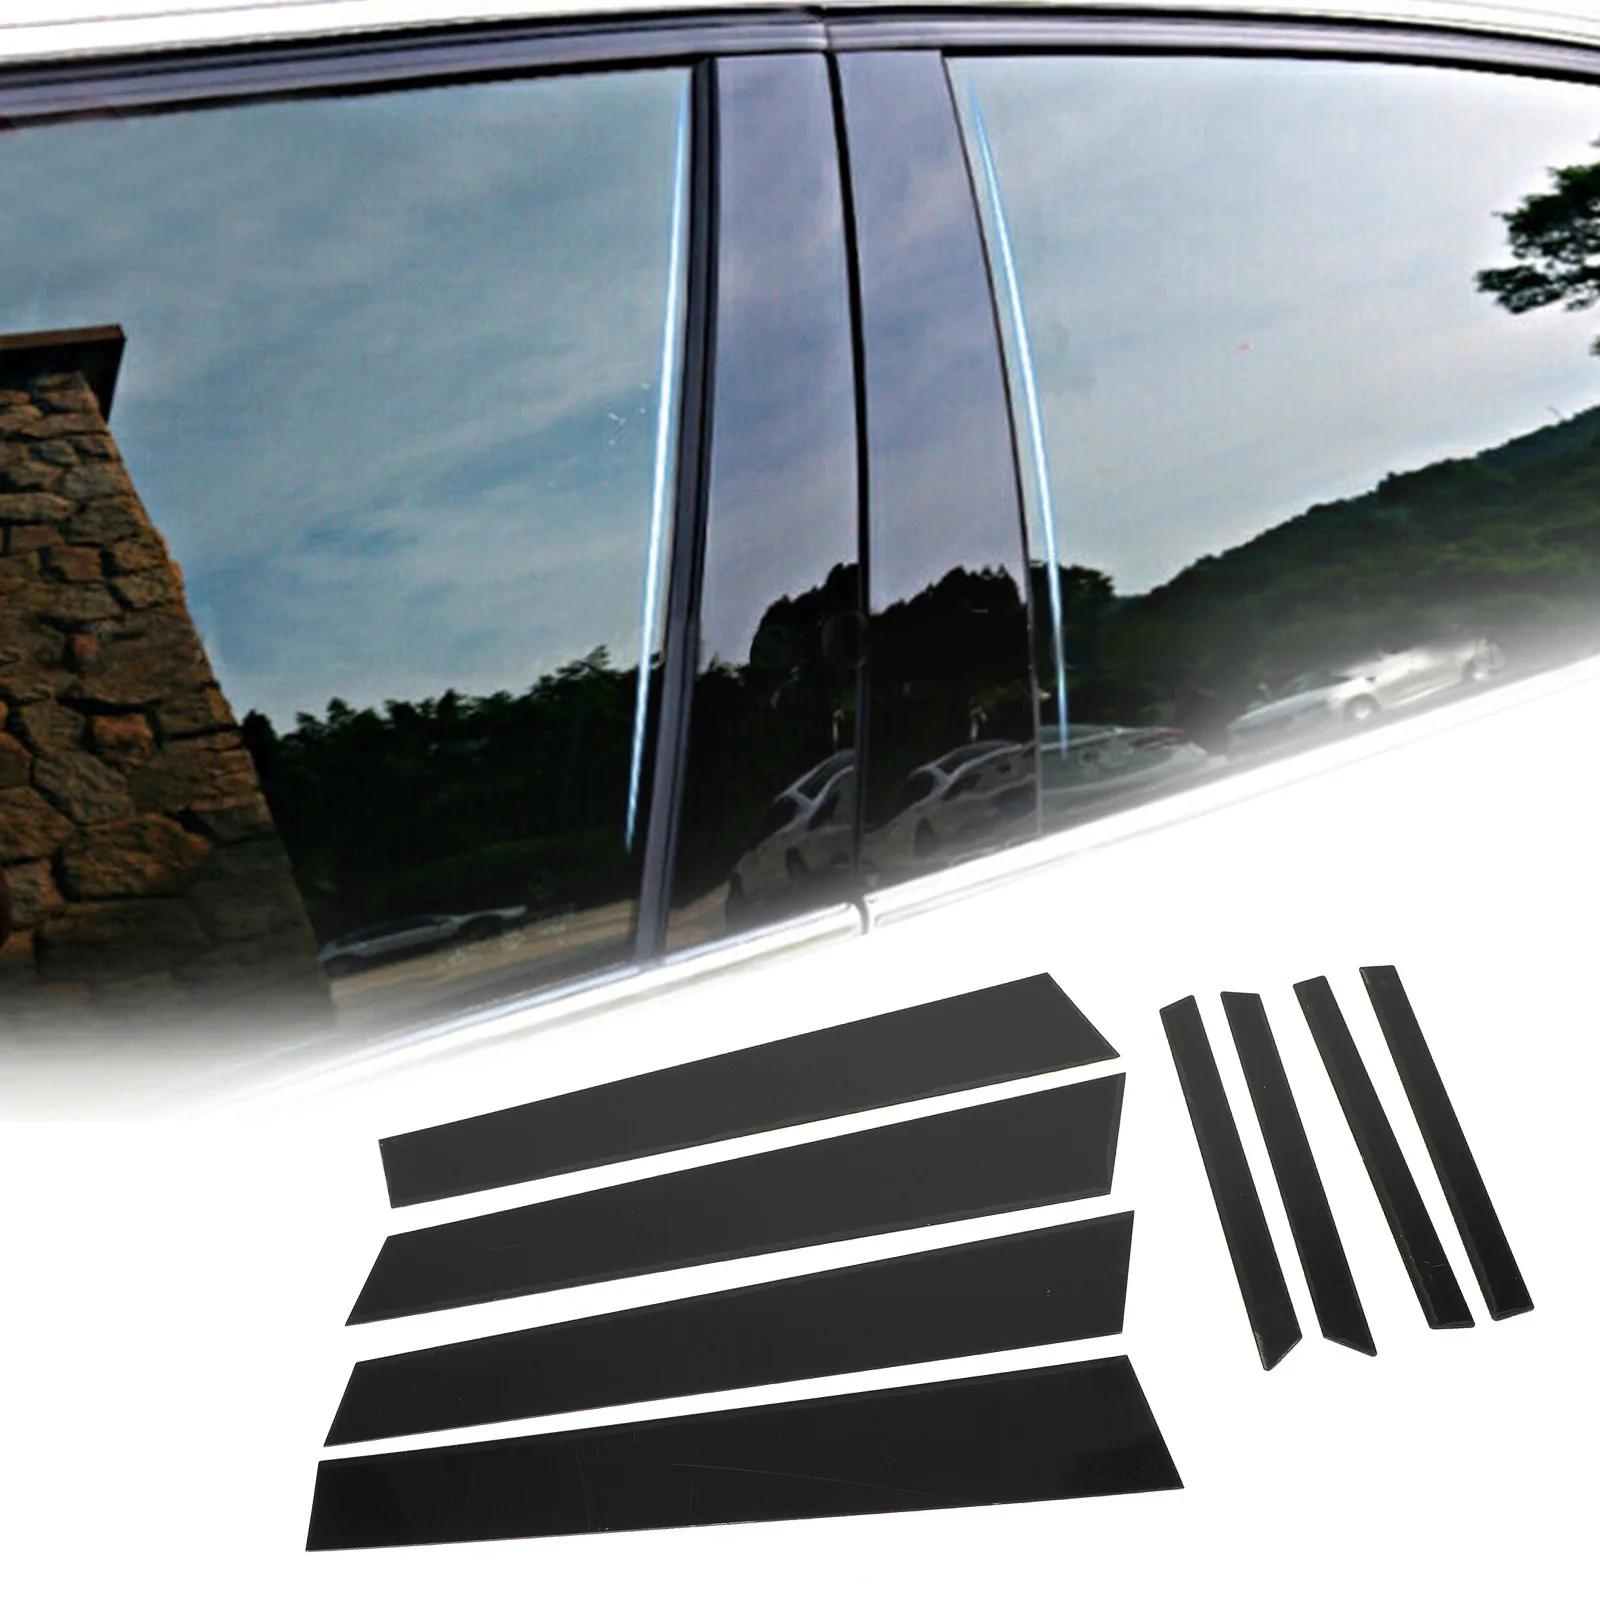 

Areyourshop Black Pillar Posts 8pcs Set Cover Door Trim Window For Honda Civic 2012 2013 2014 2015 (4dr), Pc plastic